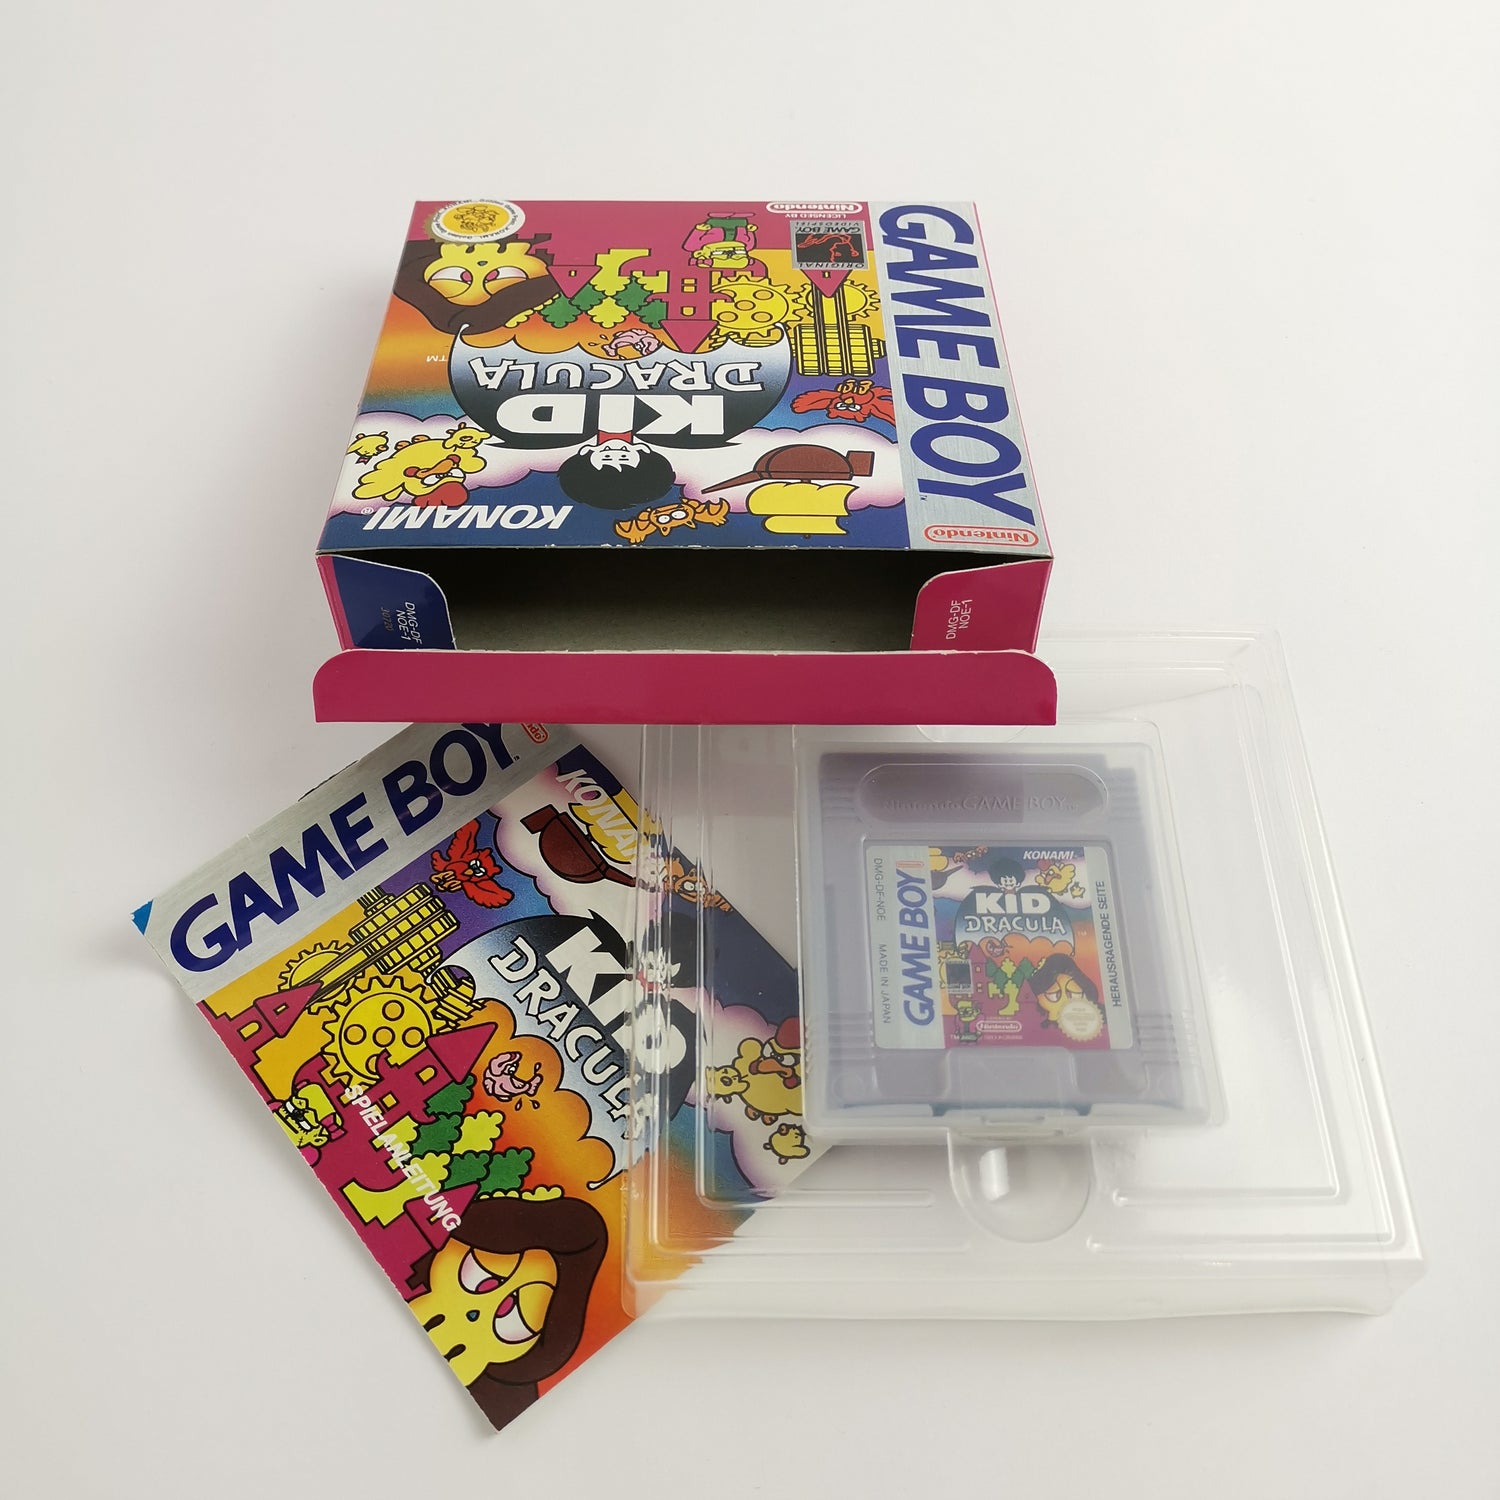 Nintendo Game Boy Classic Game: KID Dracula | Gameboy OVP - PAL Konami